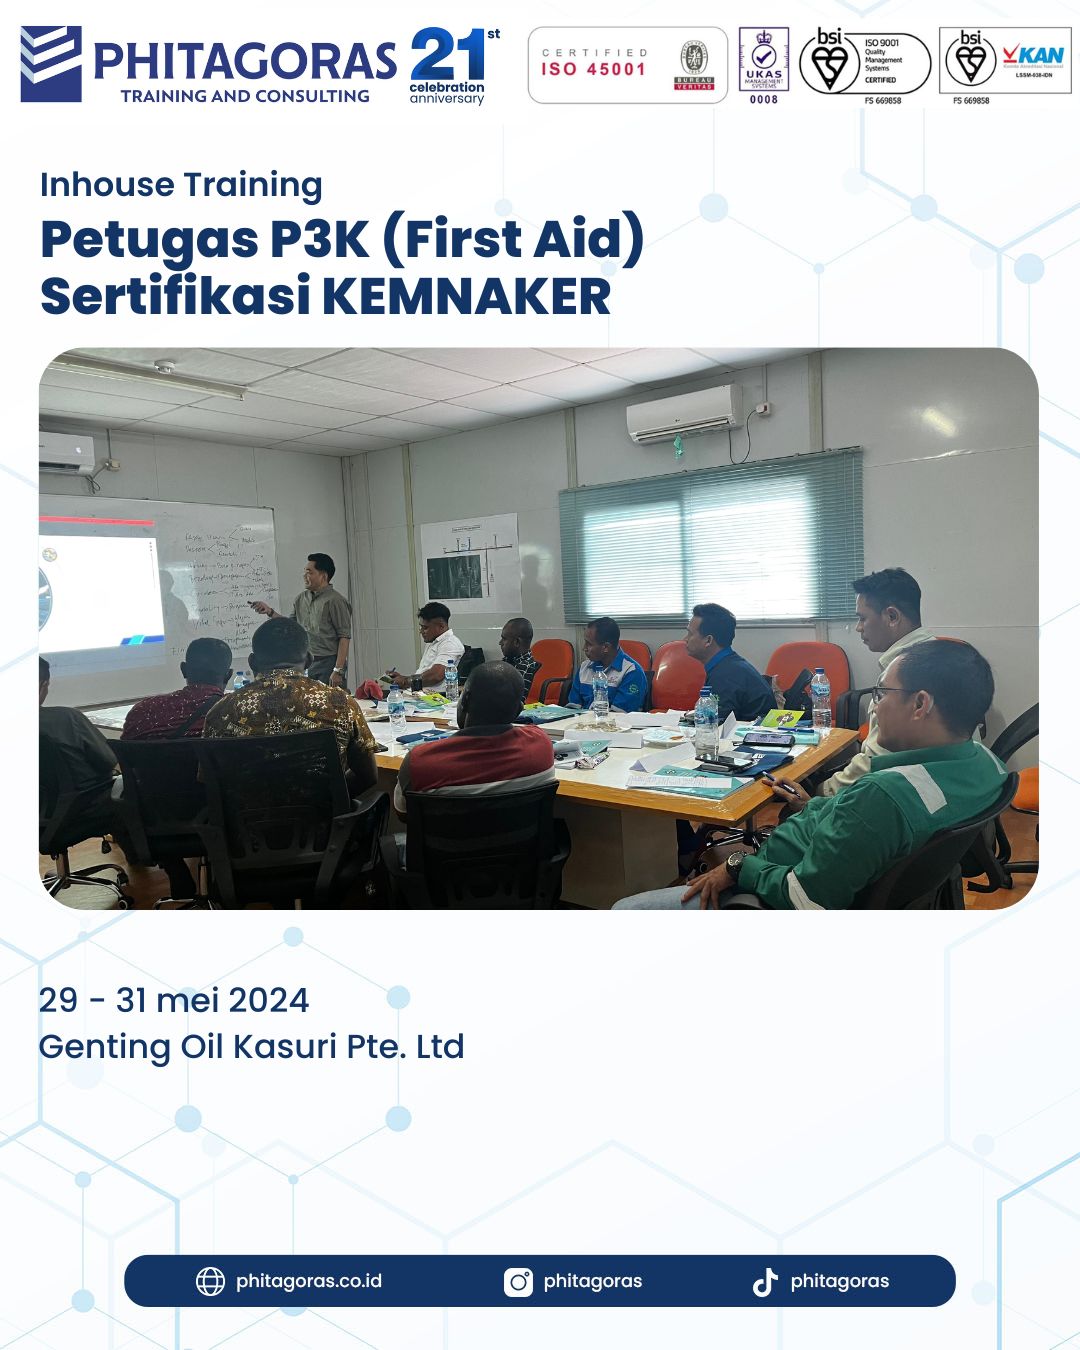 Inhouse Training Petugas P3K (First Aid) Sertifikasi KEMNAKER - Genting Oil Kasuri Pte. Ltd 29 - 31 Mei 2024